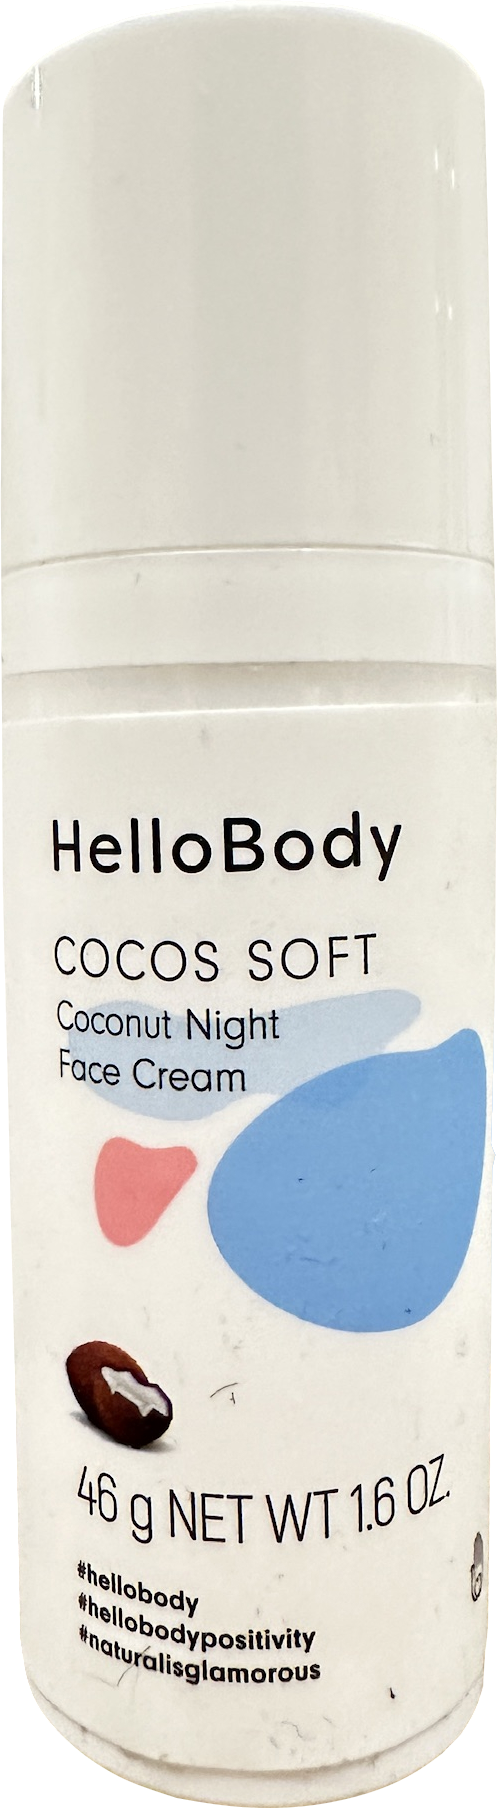 hellobody Cocos Soft Coconut Night Face Cream 46g